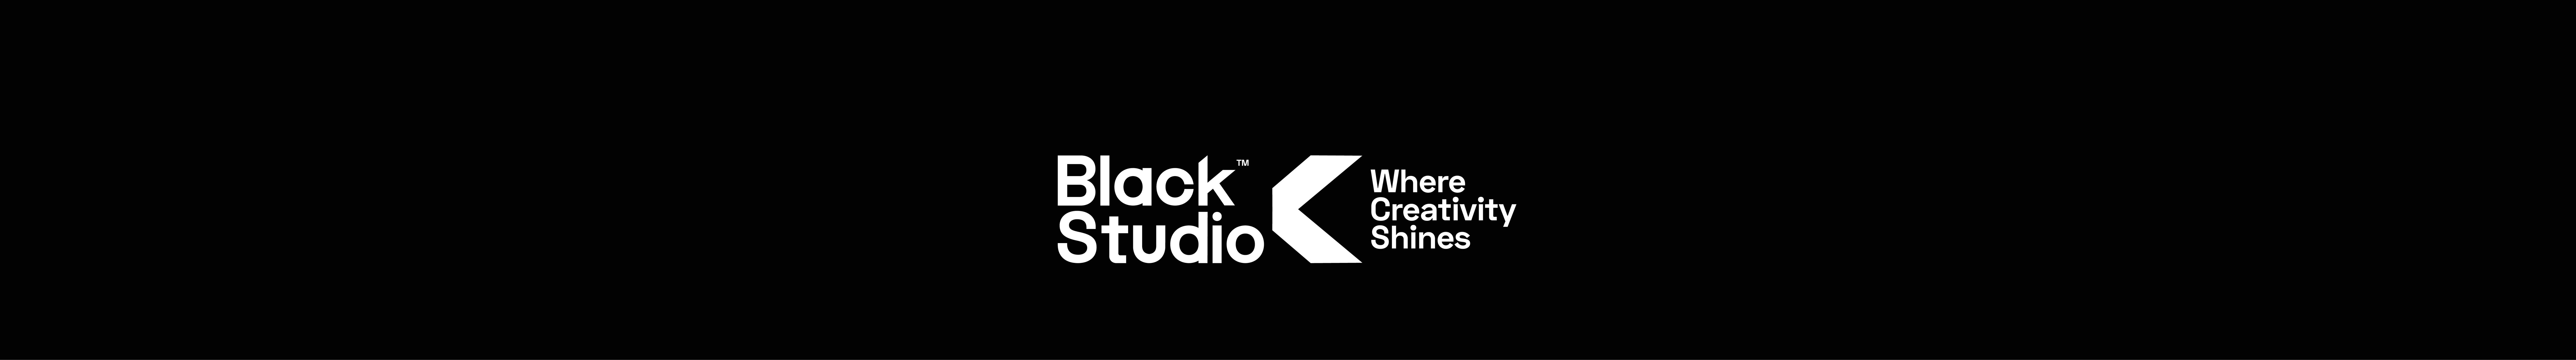 Black Studio™ のプロファイルバナー